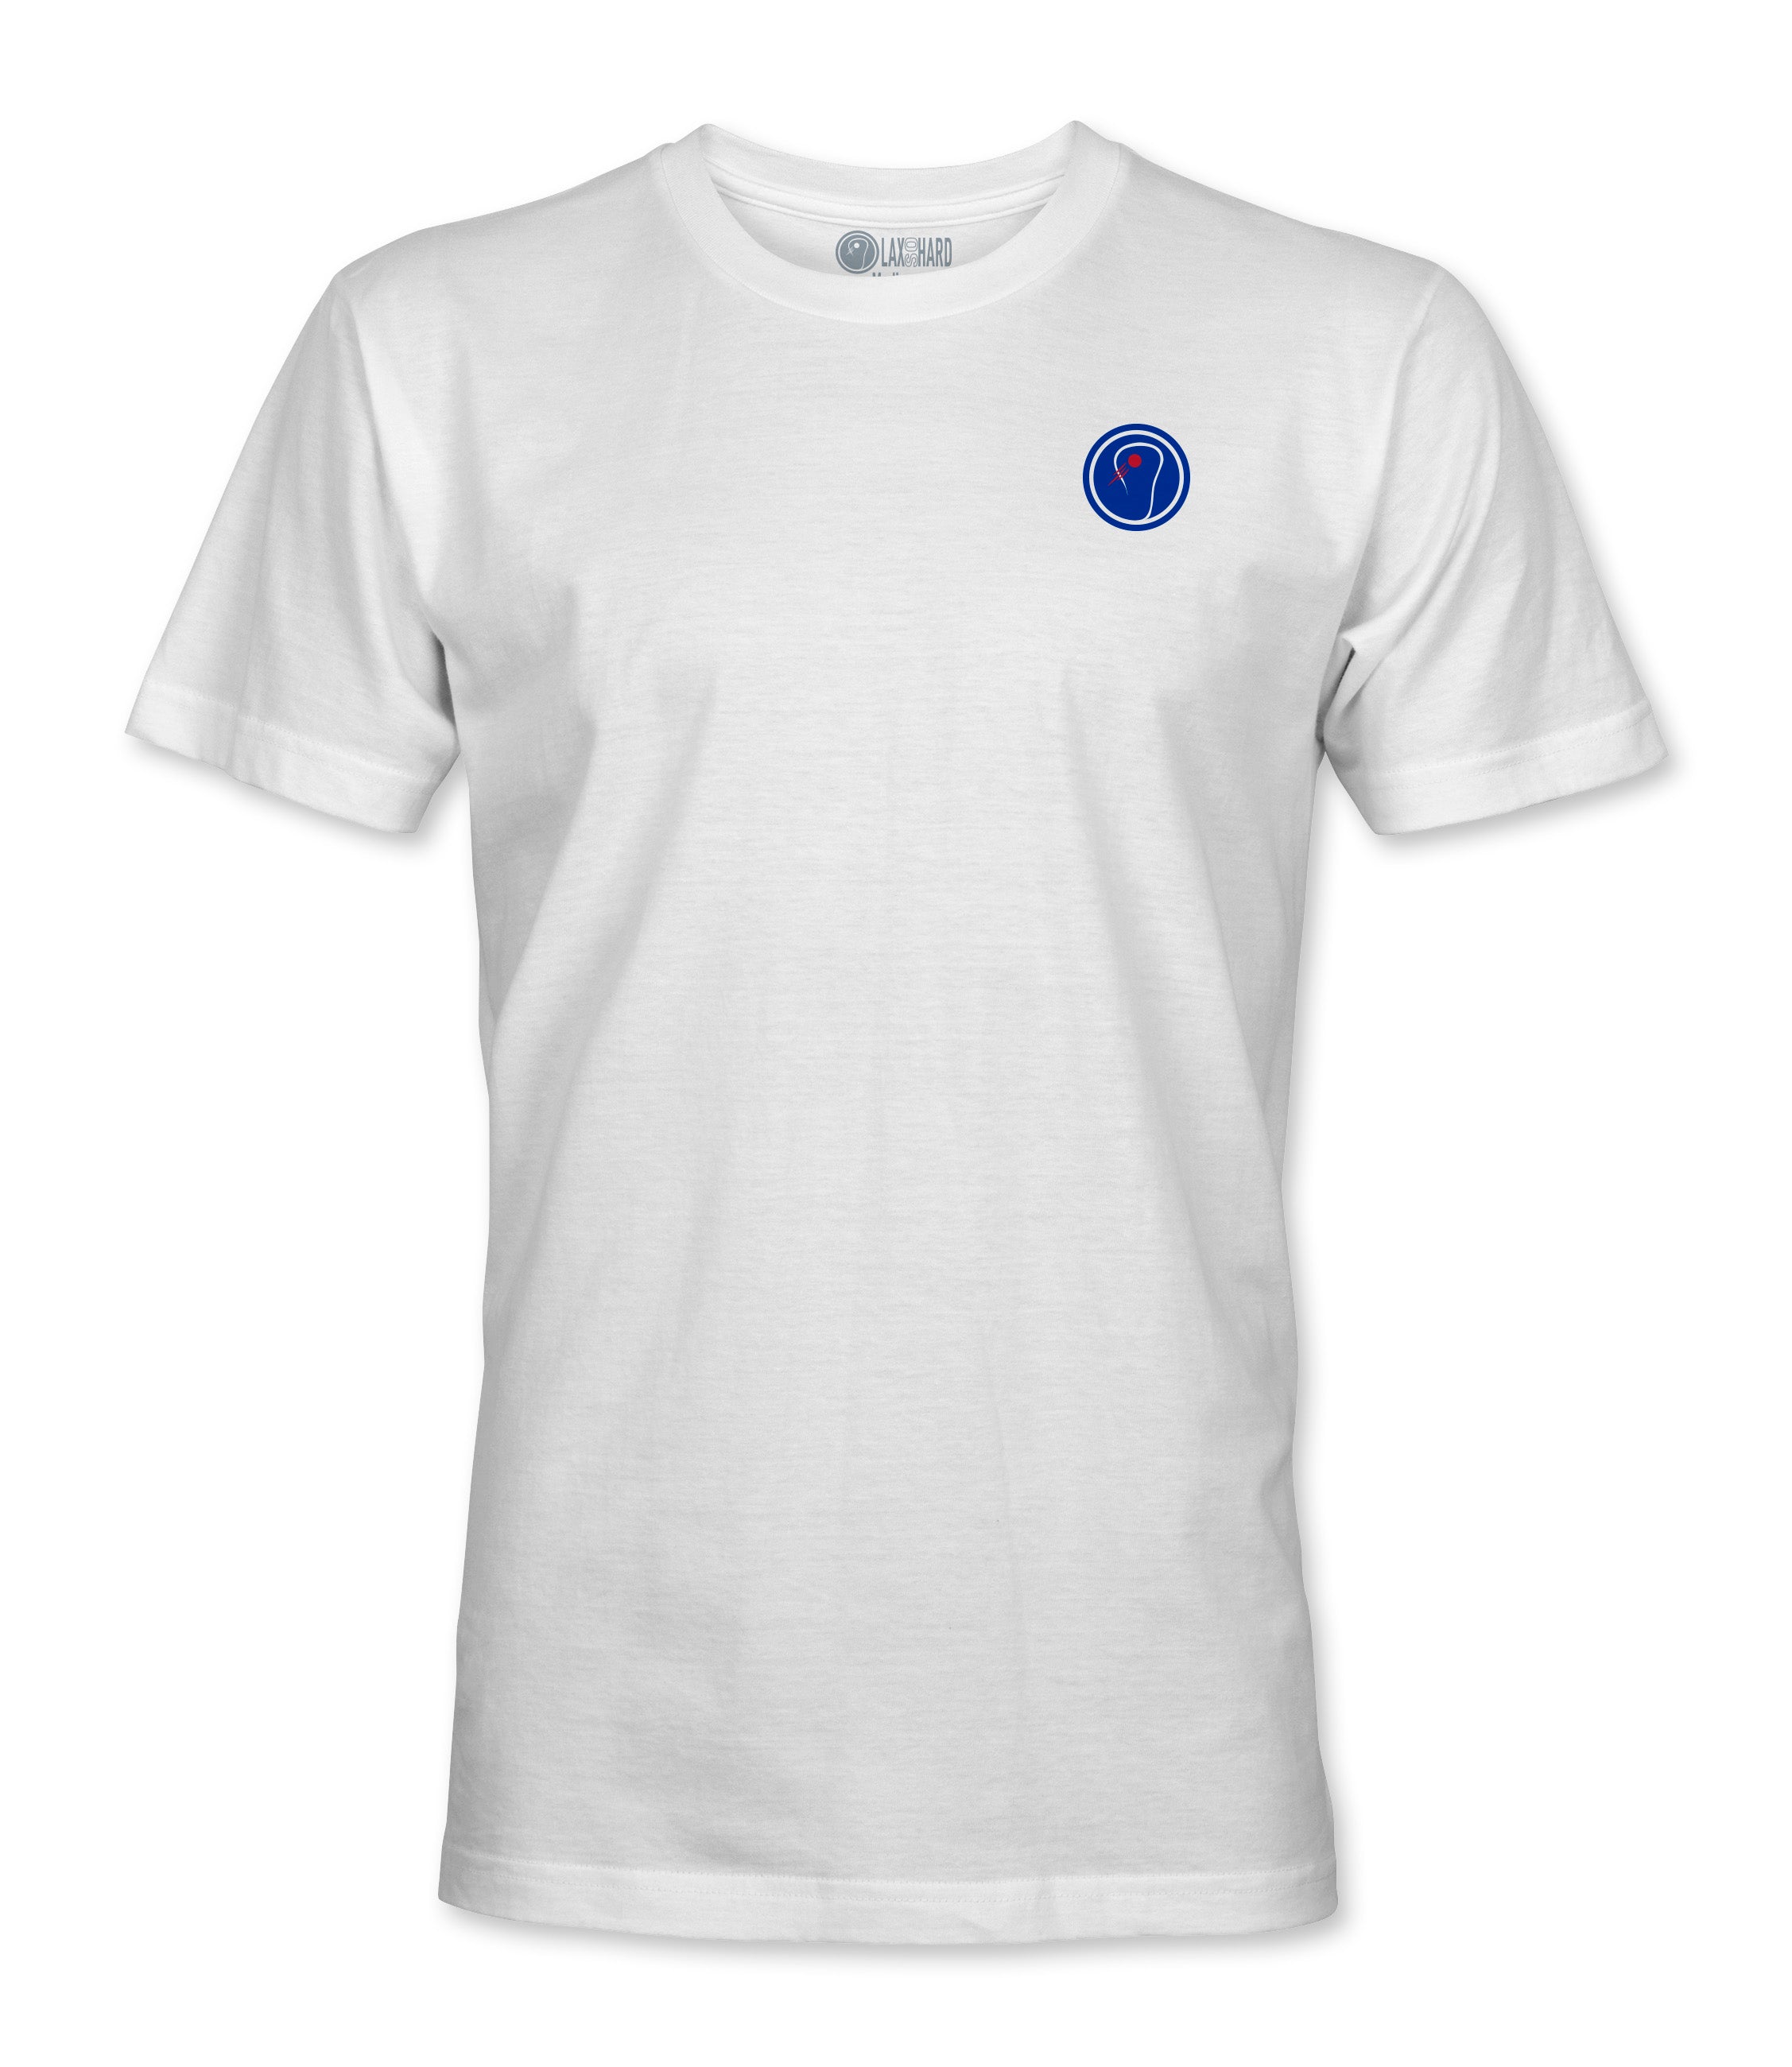 Boys American LAX T-Shirt White